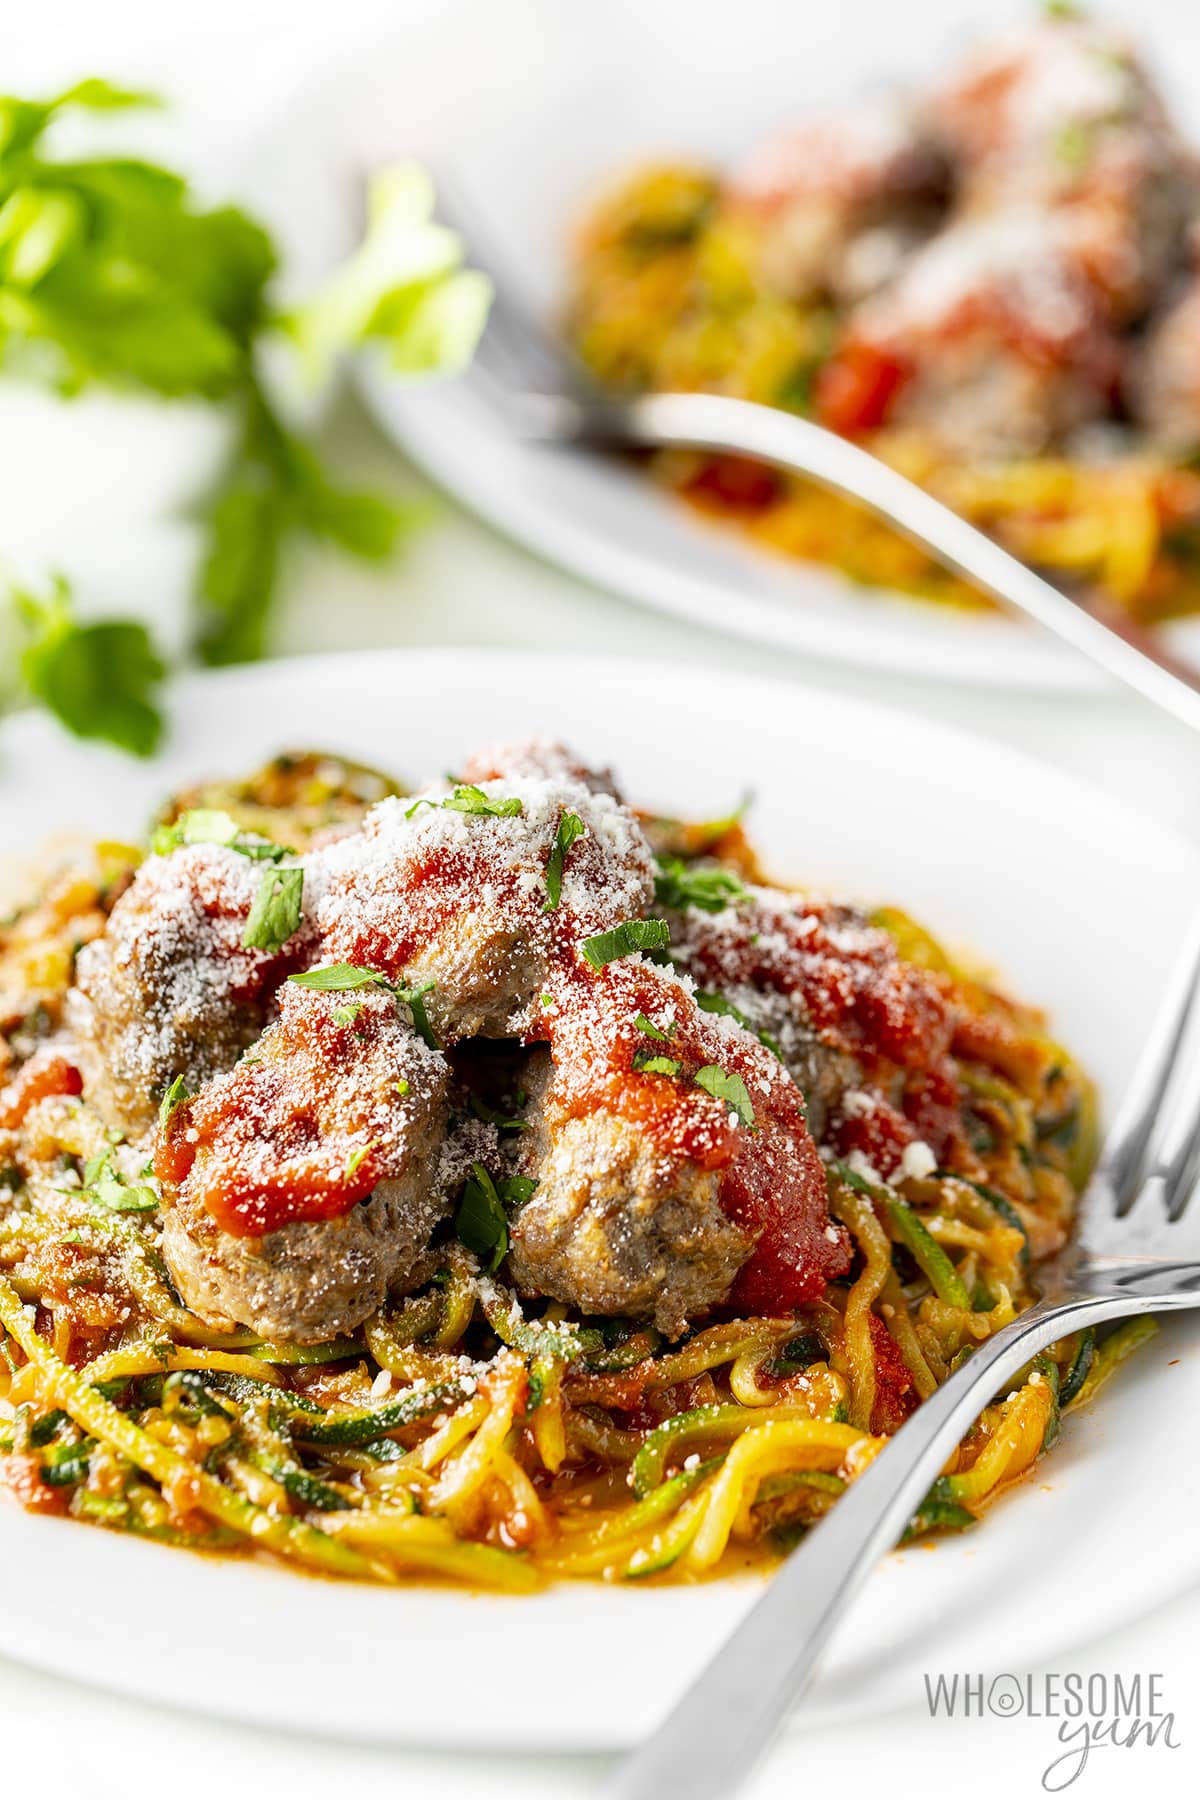 https://www.wholesomeyum.com/wp-content/uploads/2019/03/wholesomeyum-Zucchini-Spaghetti-With-Meatballs-6.jpg